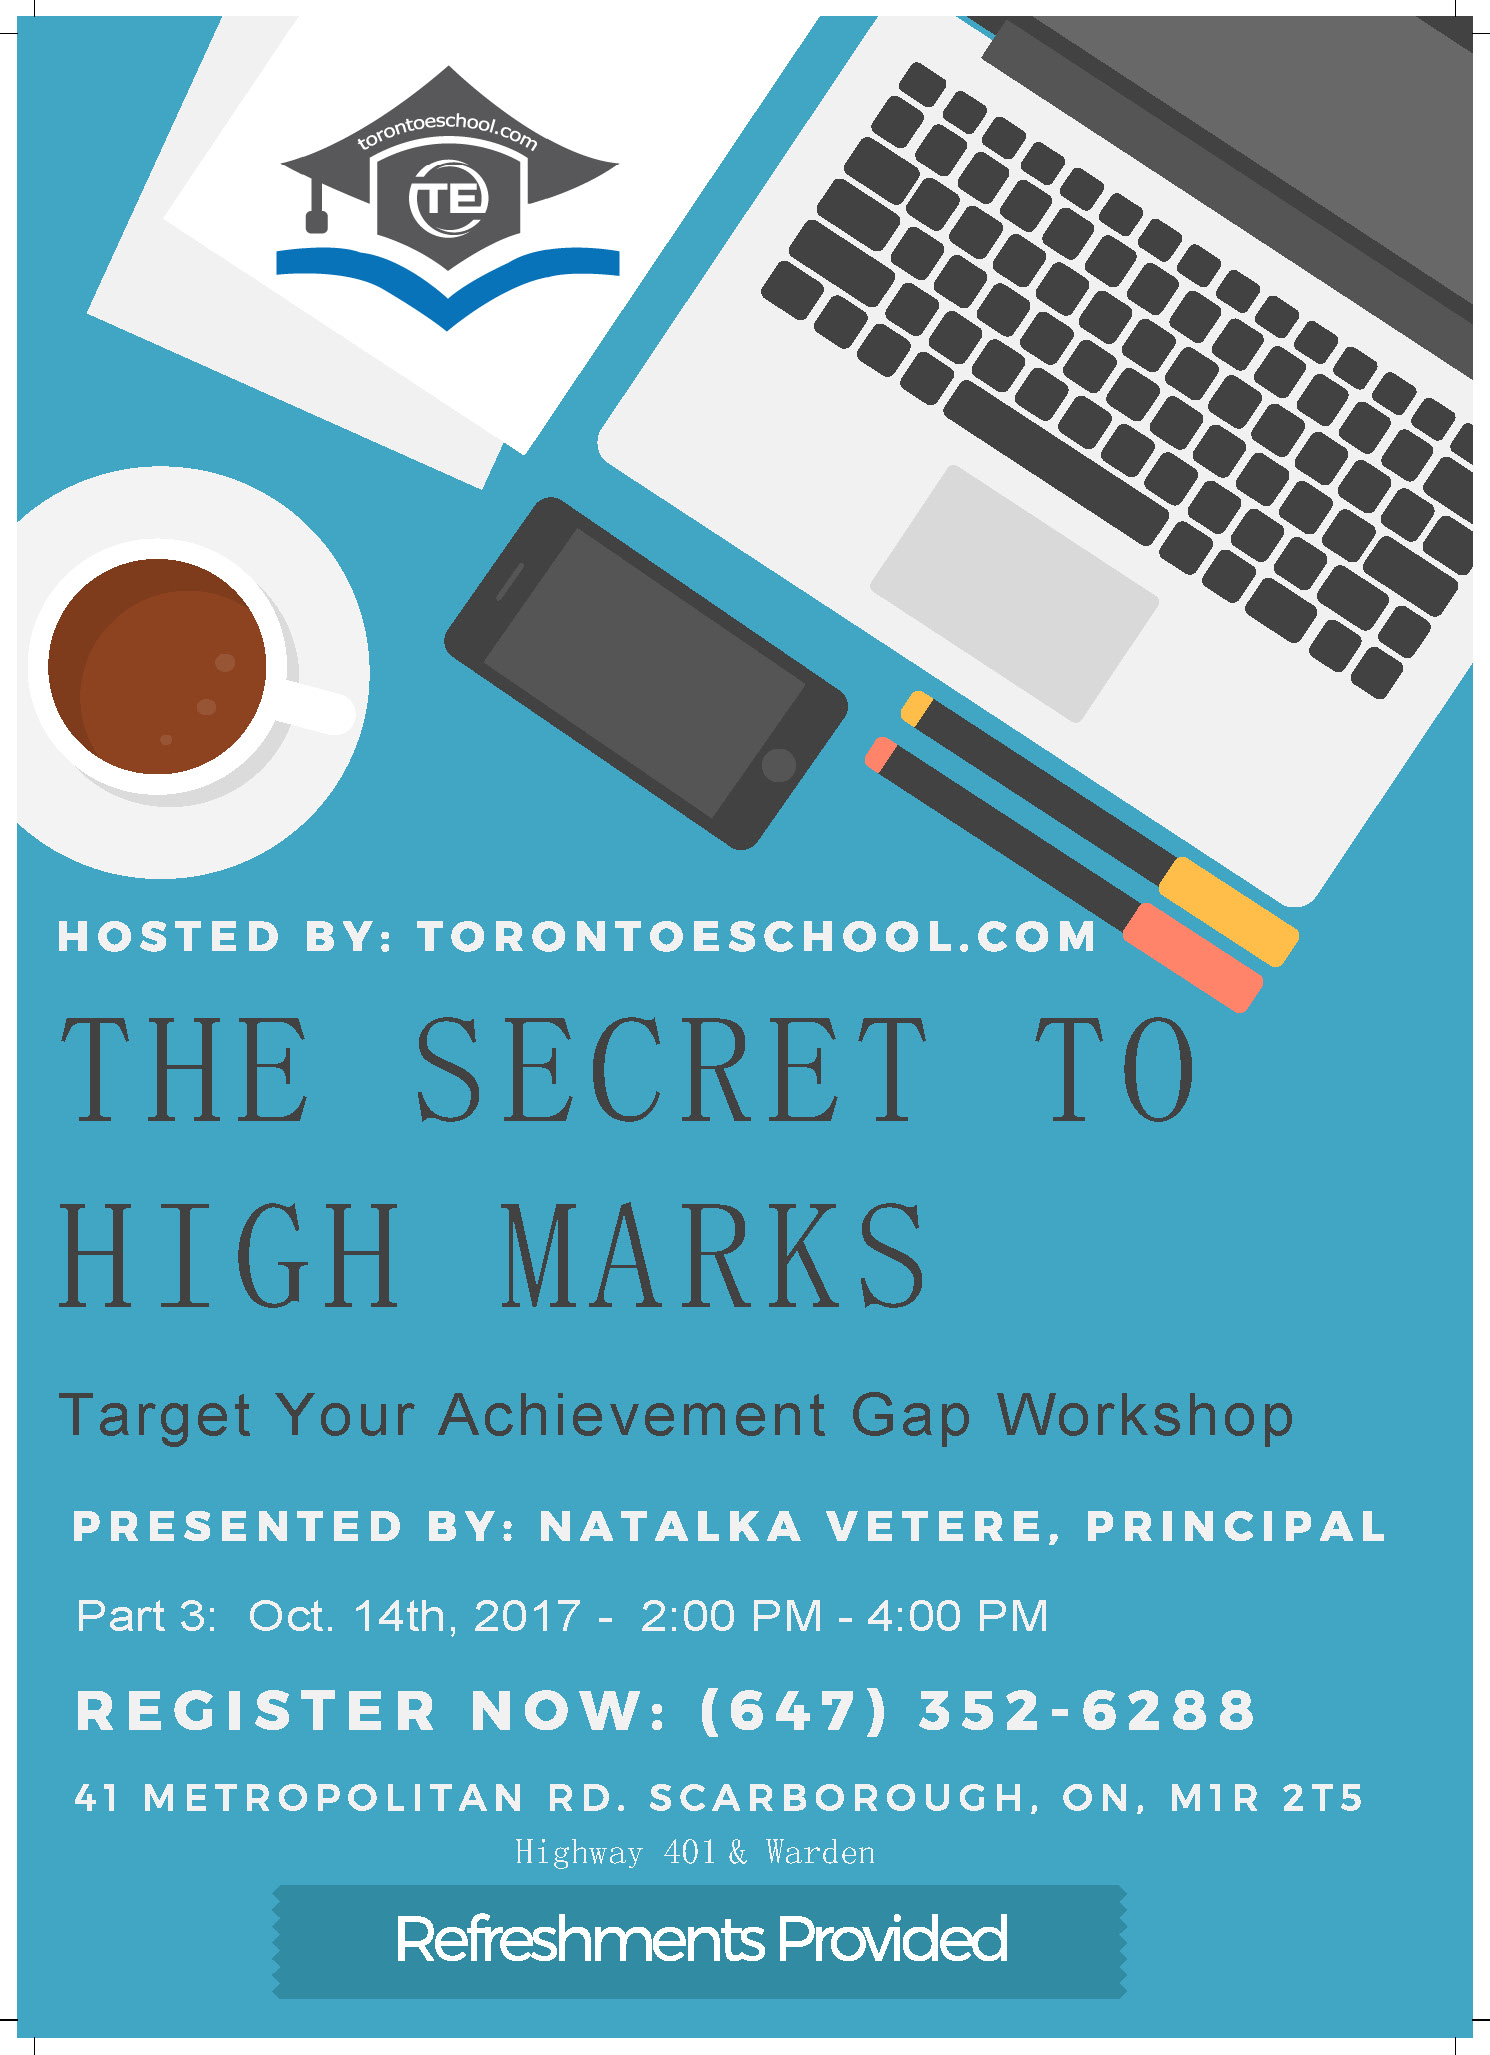 The Secret to High Mark Seminar